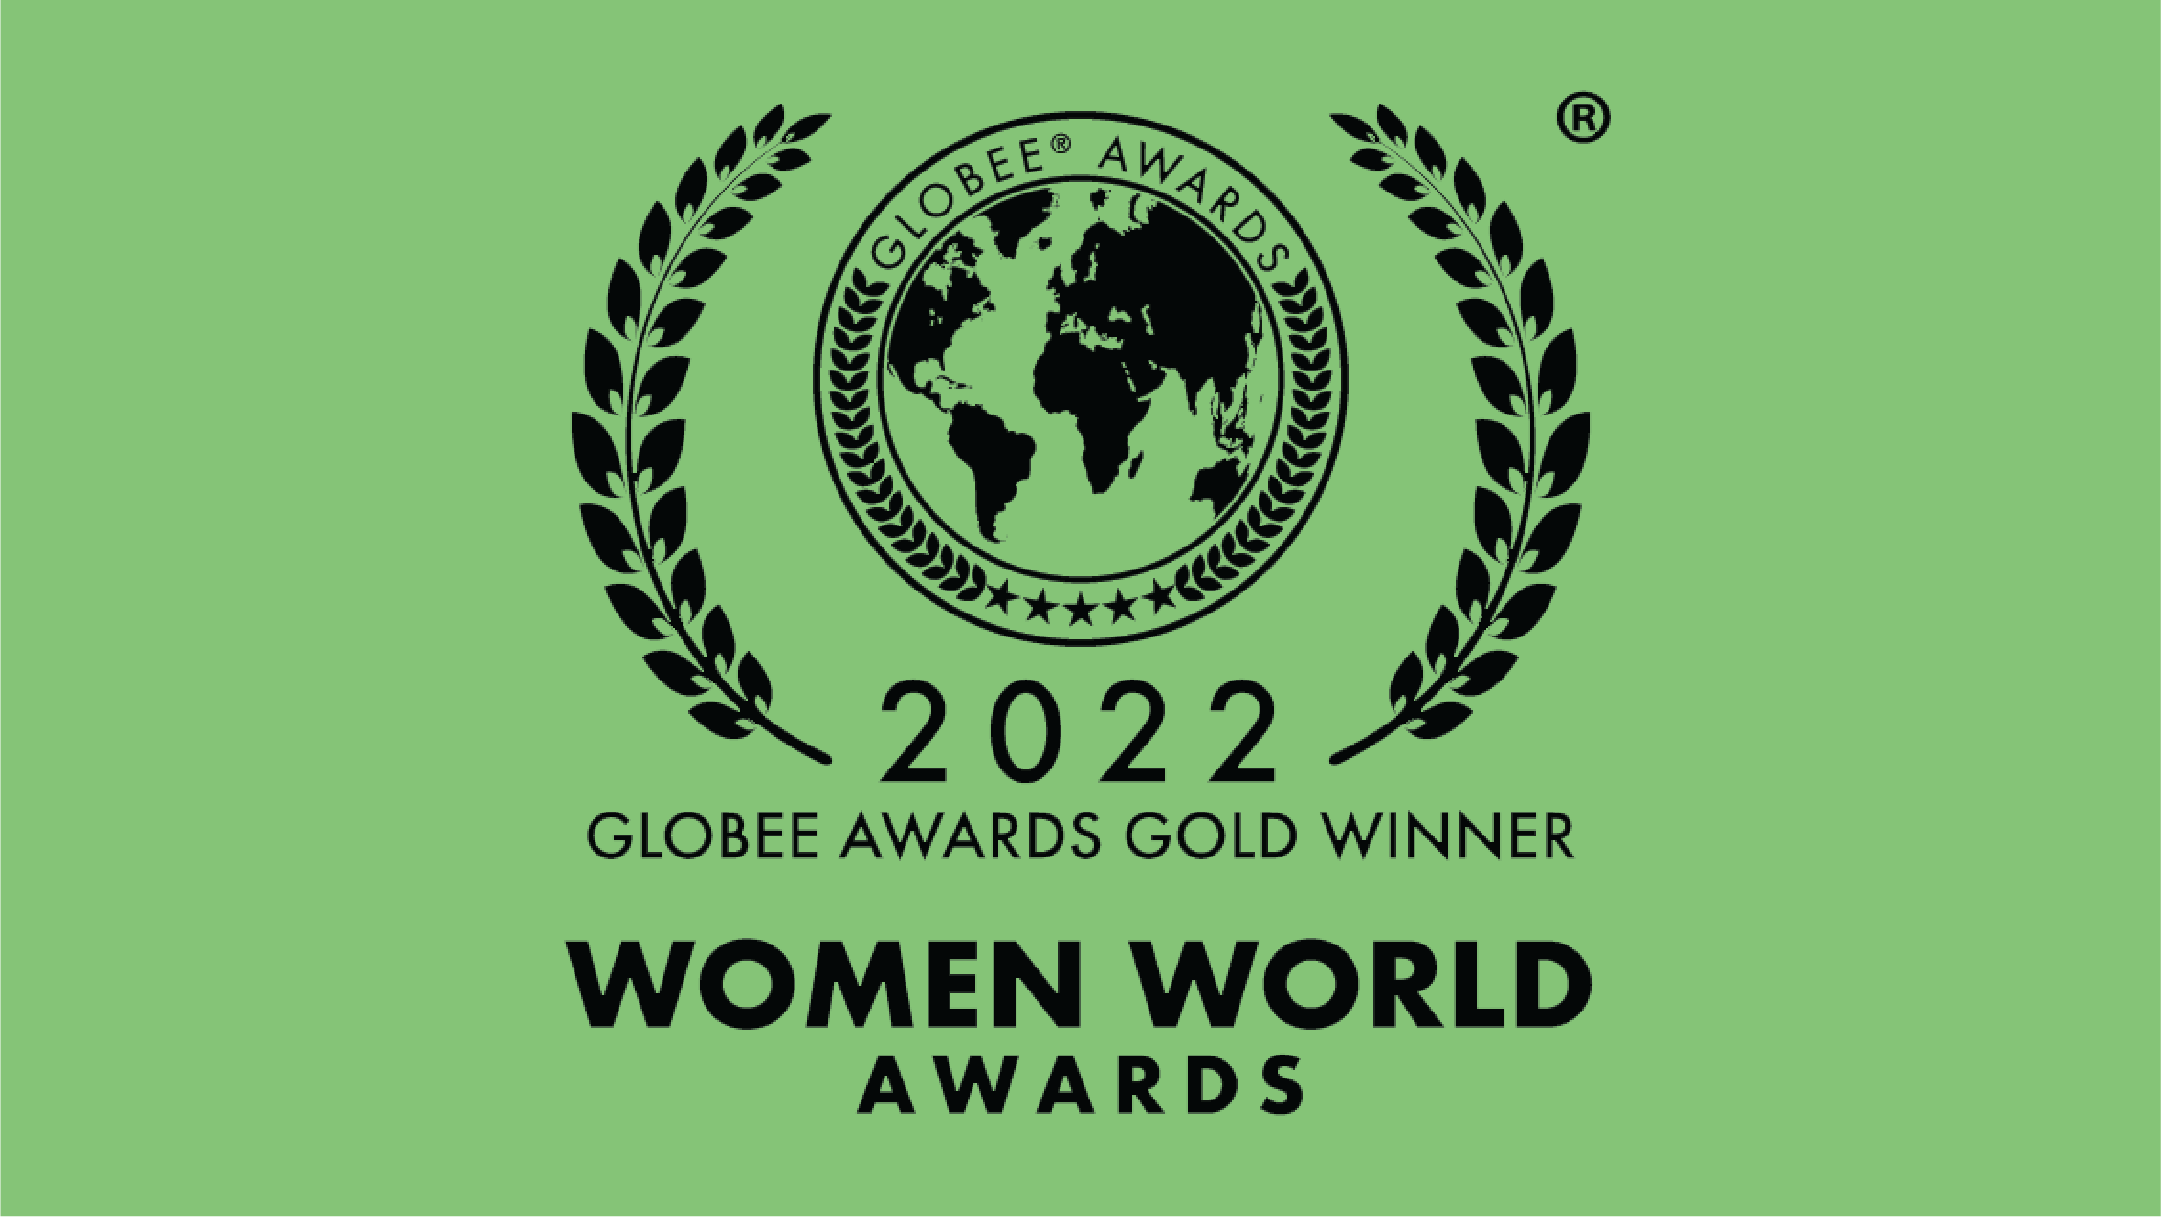 Globee Awards Gold Winner 2022, Women World Awards